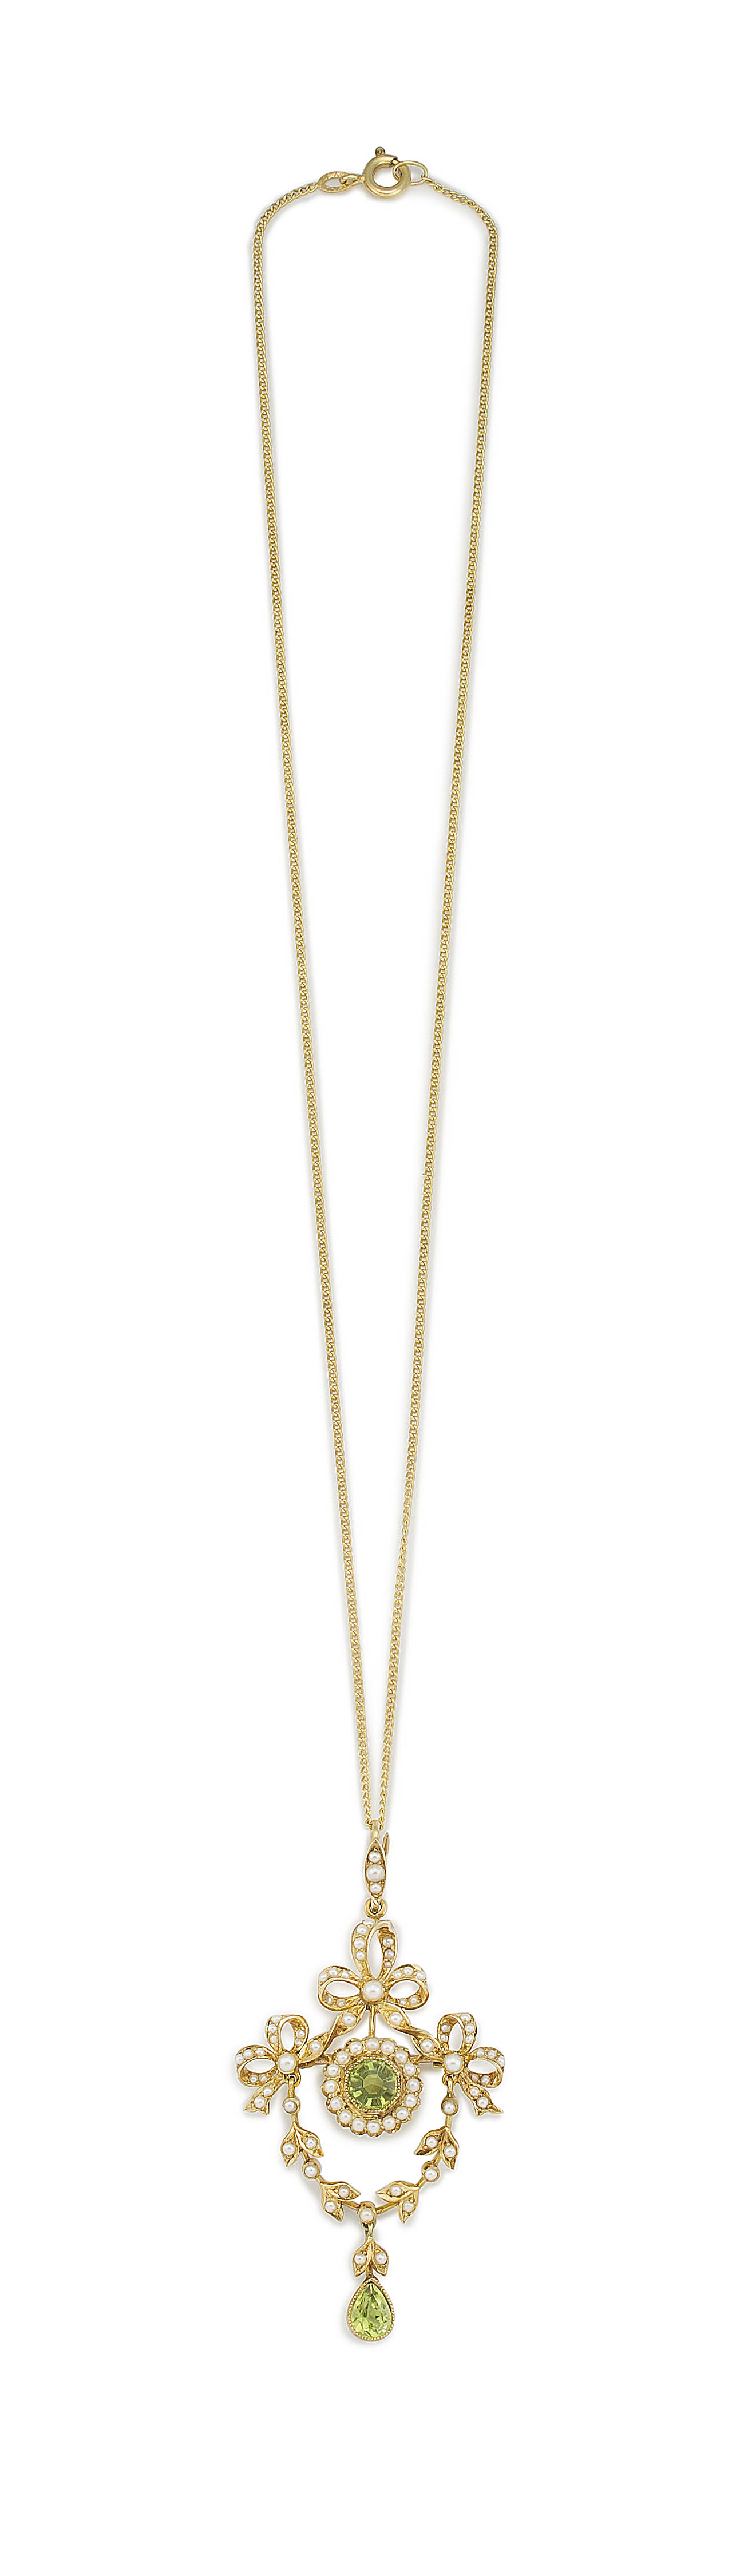 An Edwardian peridot and seed-pearl pendant/brooch